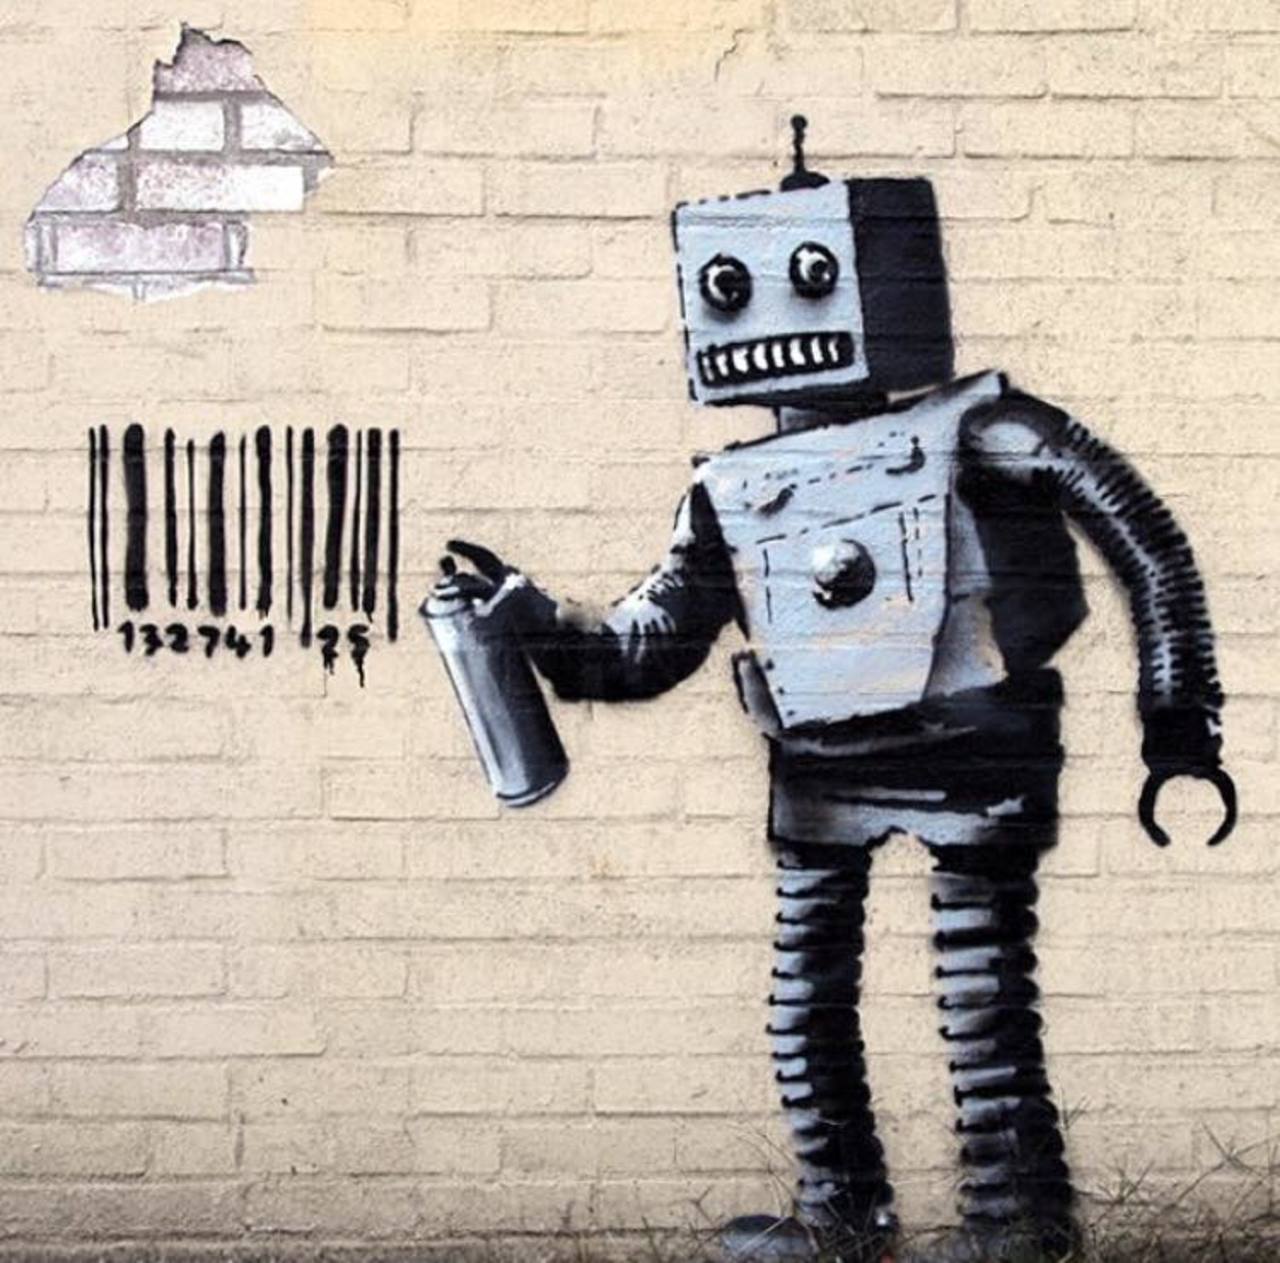 Stunning Street Art by Banksy #art #artists #artwork #streetart #muralart #graffiti #artistsnartlovers #lovetwitter https://t.co/SXHjBFpWwN